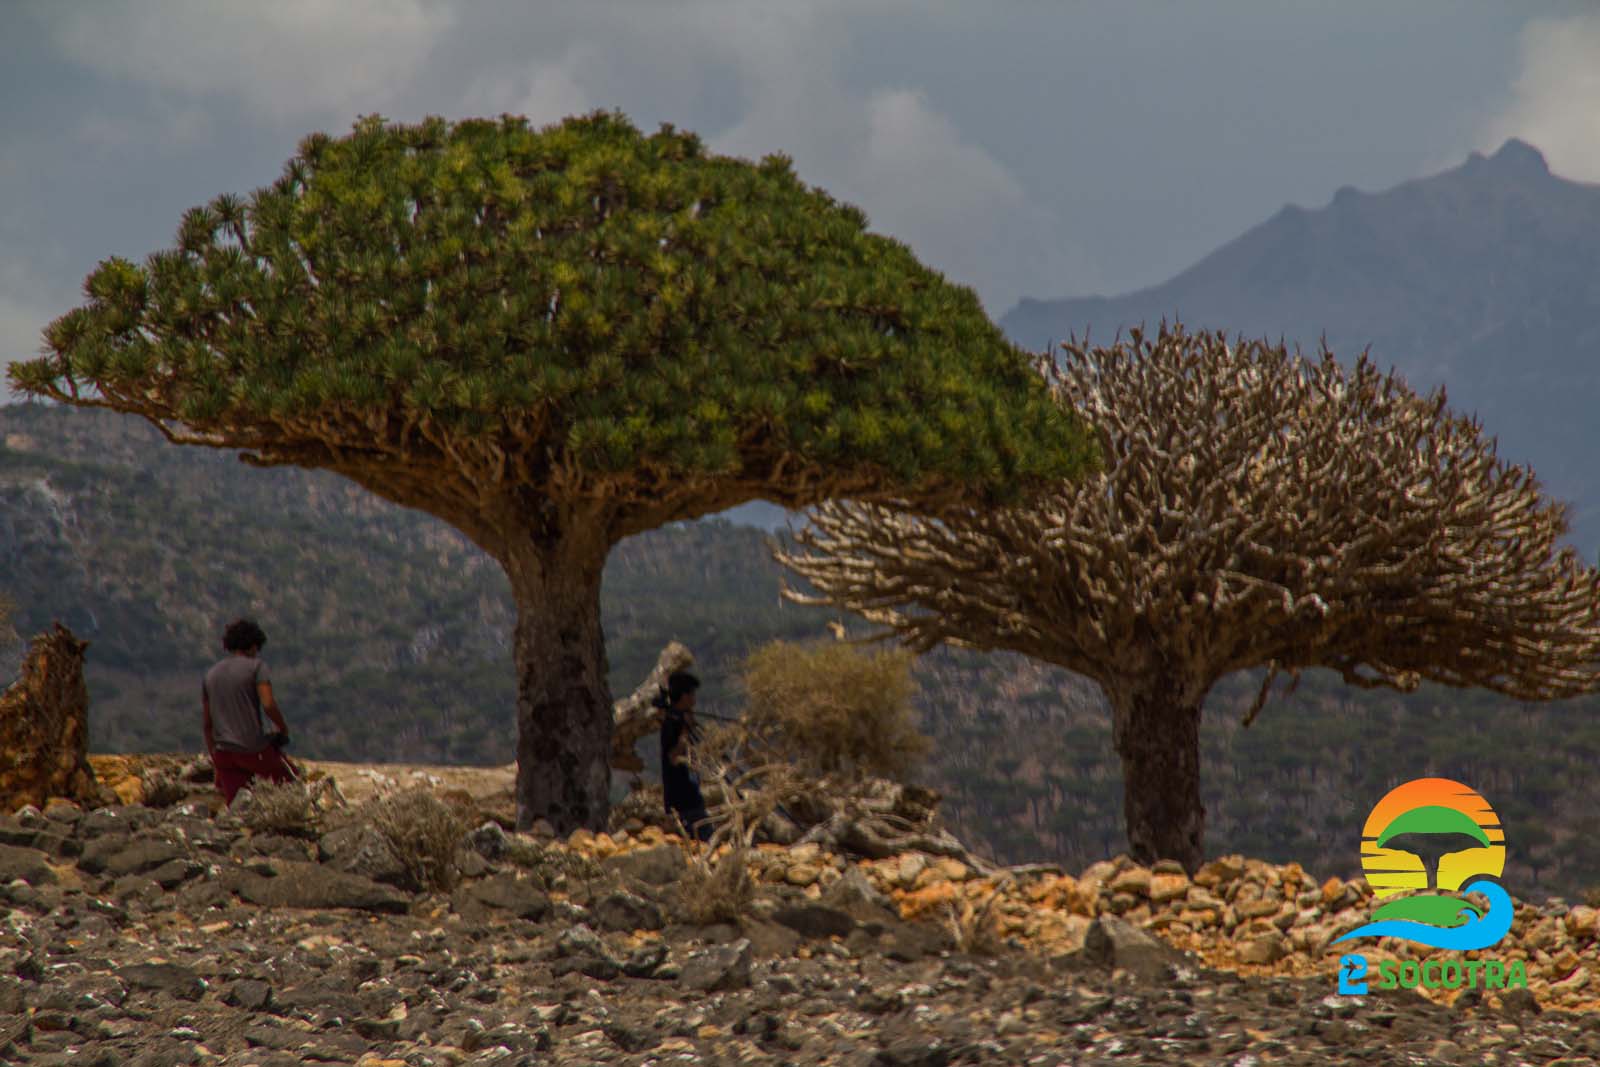 Dragon’s blood tree dead and green, Diksam plateau, Socotra Island